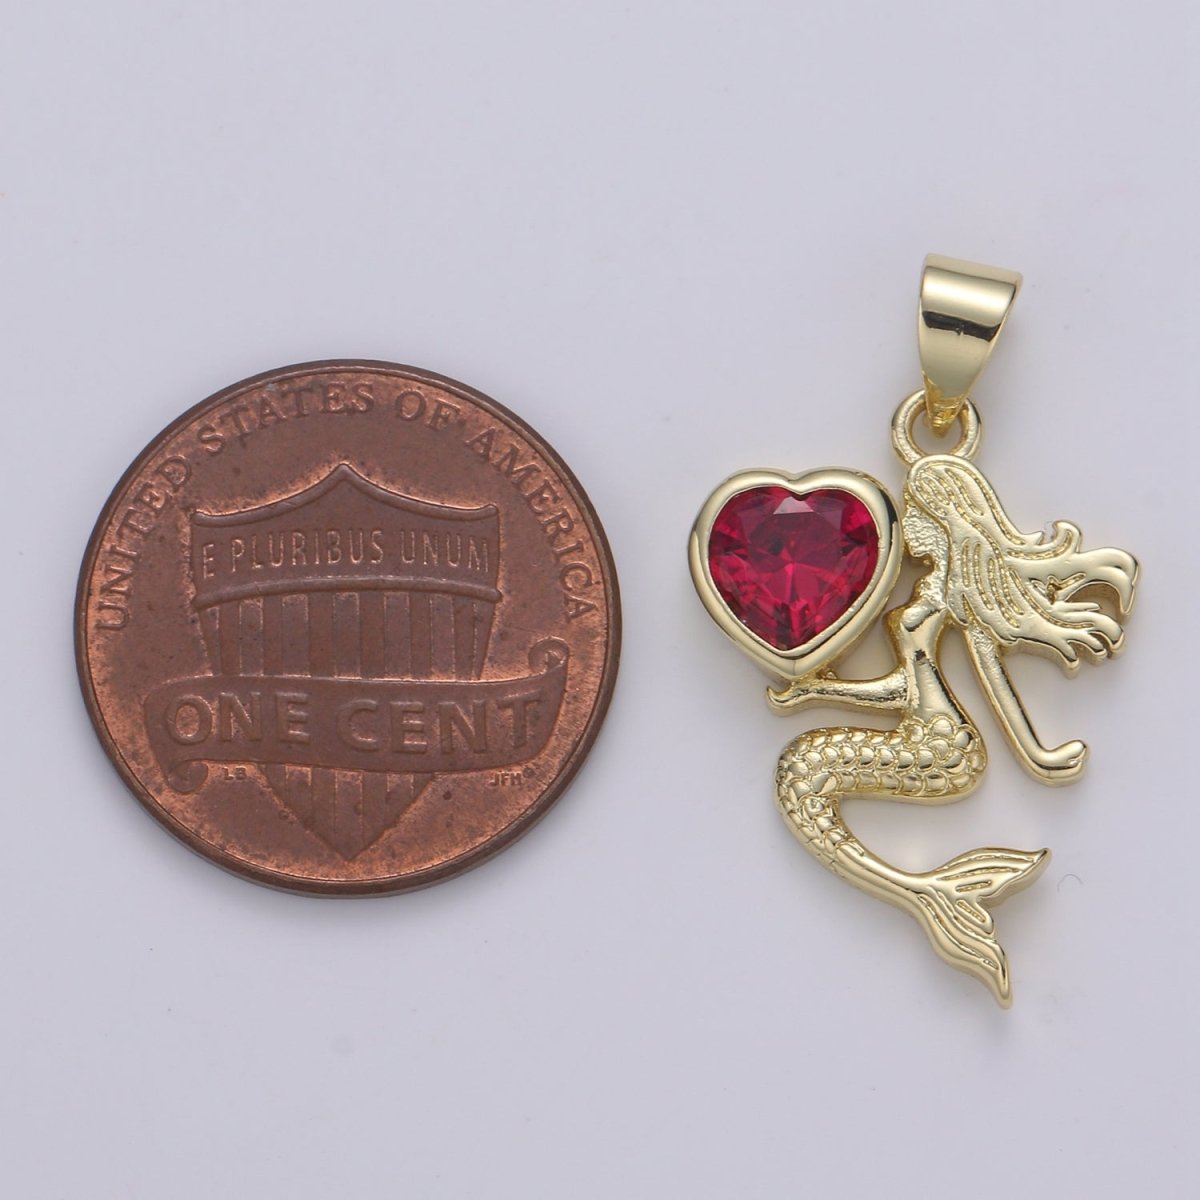 24K Gold Solitaire CZ Mermaid Pendant Charm, Love CZ Mermaid Heart Pendant Charm, Pendant, For DIY Jewelry H-285 H-286 - DLUXCA